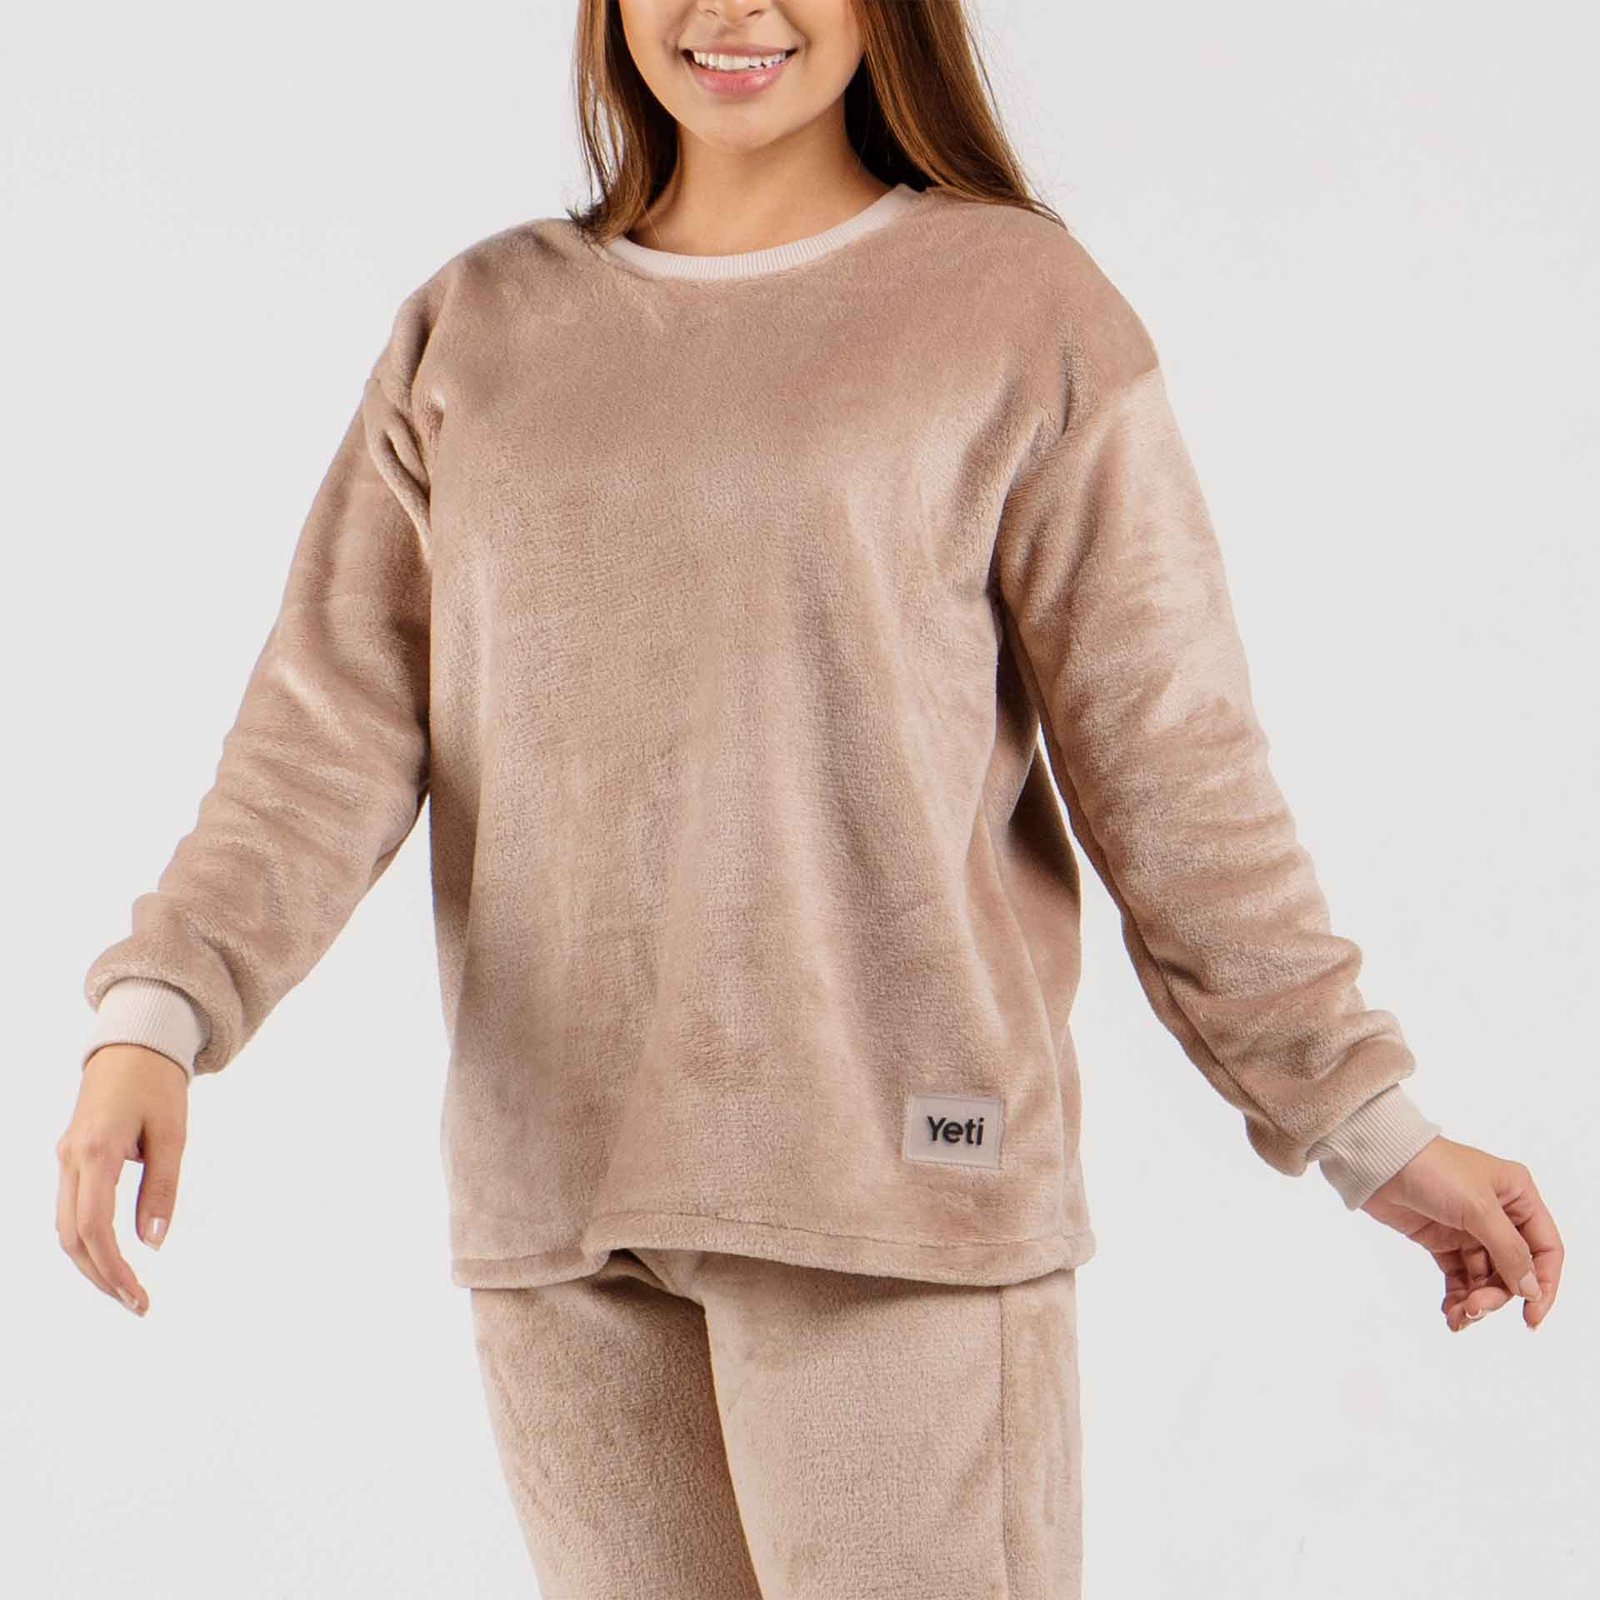 controlador Confusión estómago Pijama para mujer térmica - Camibuzo pijama mujer - Yeti